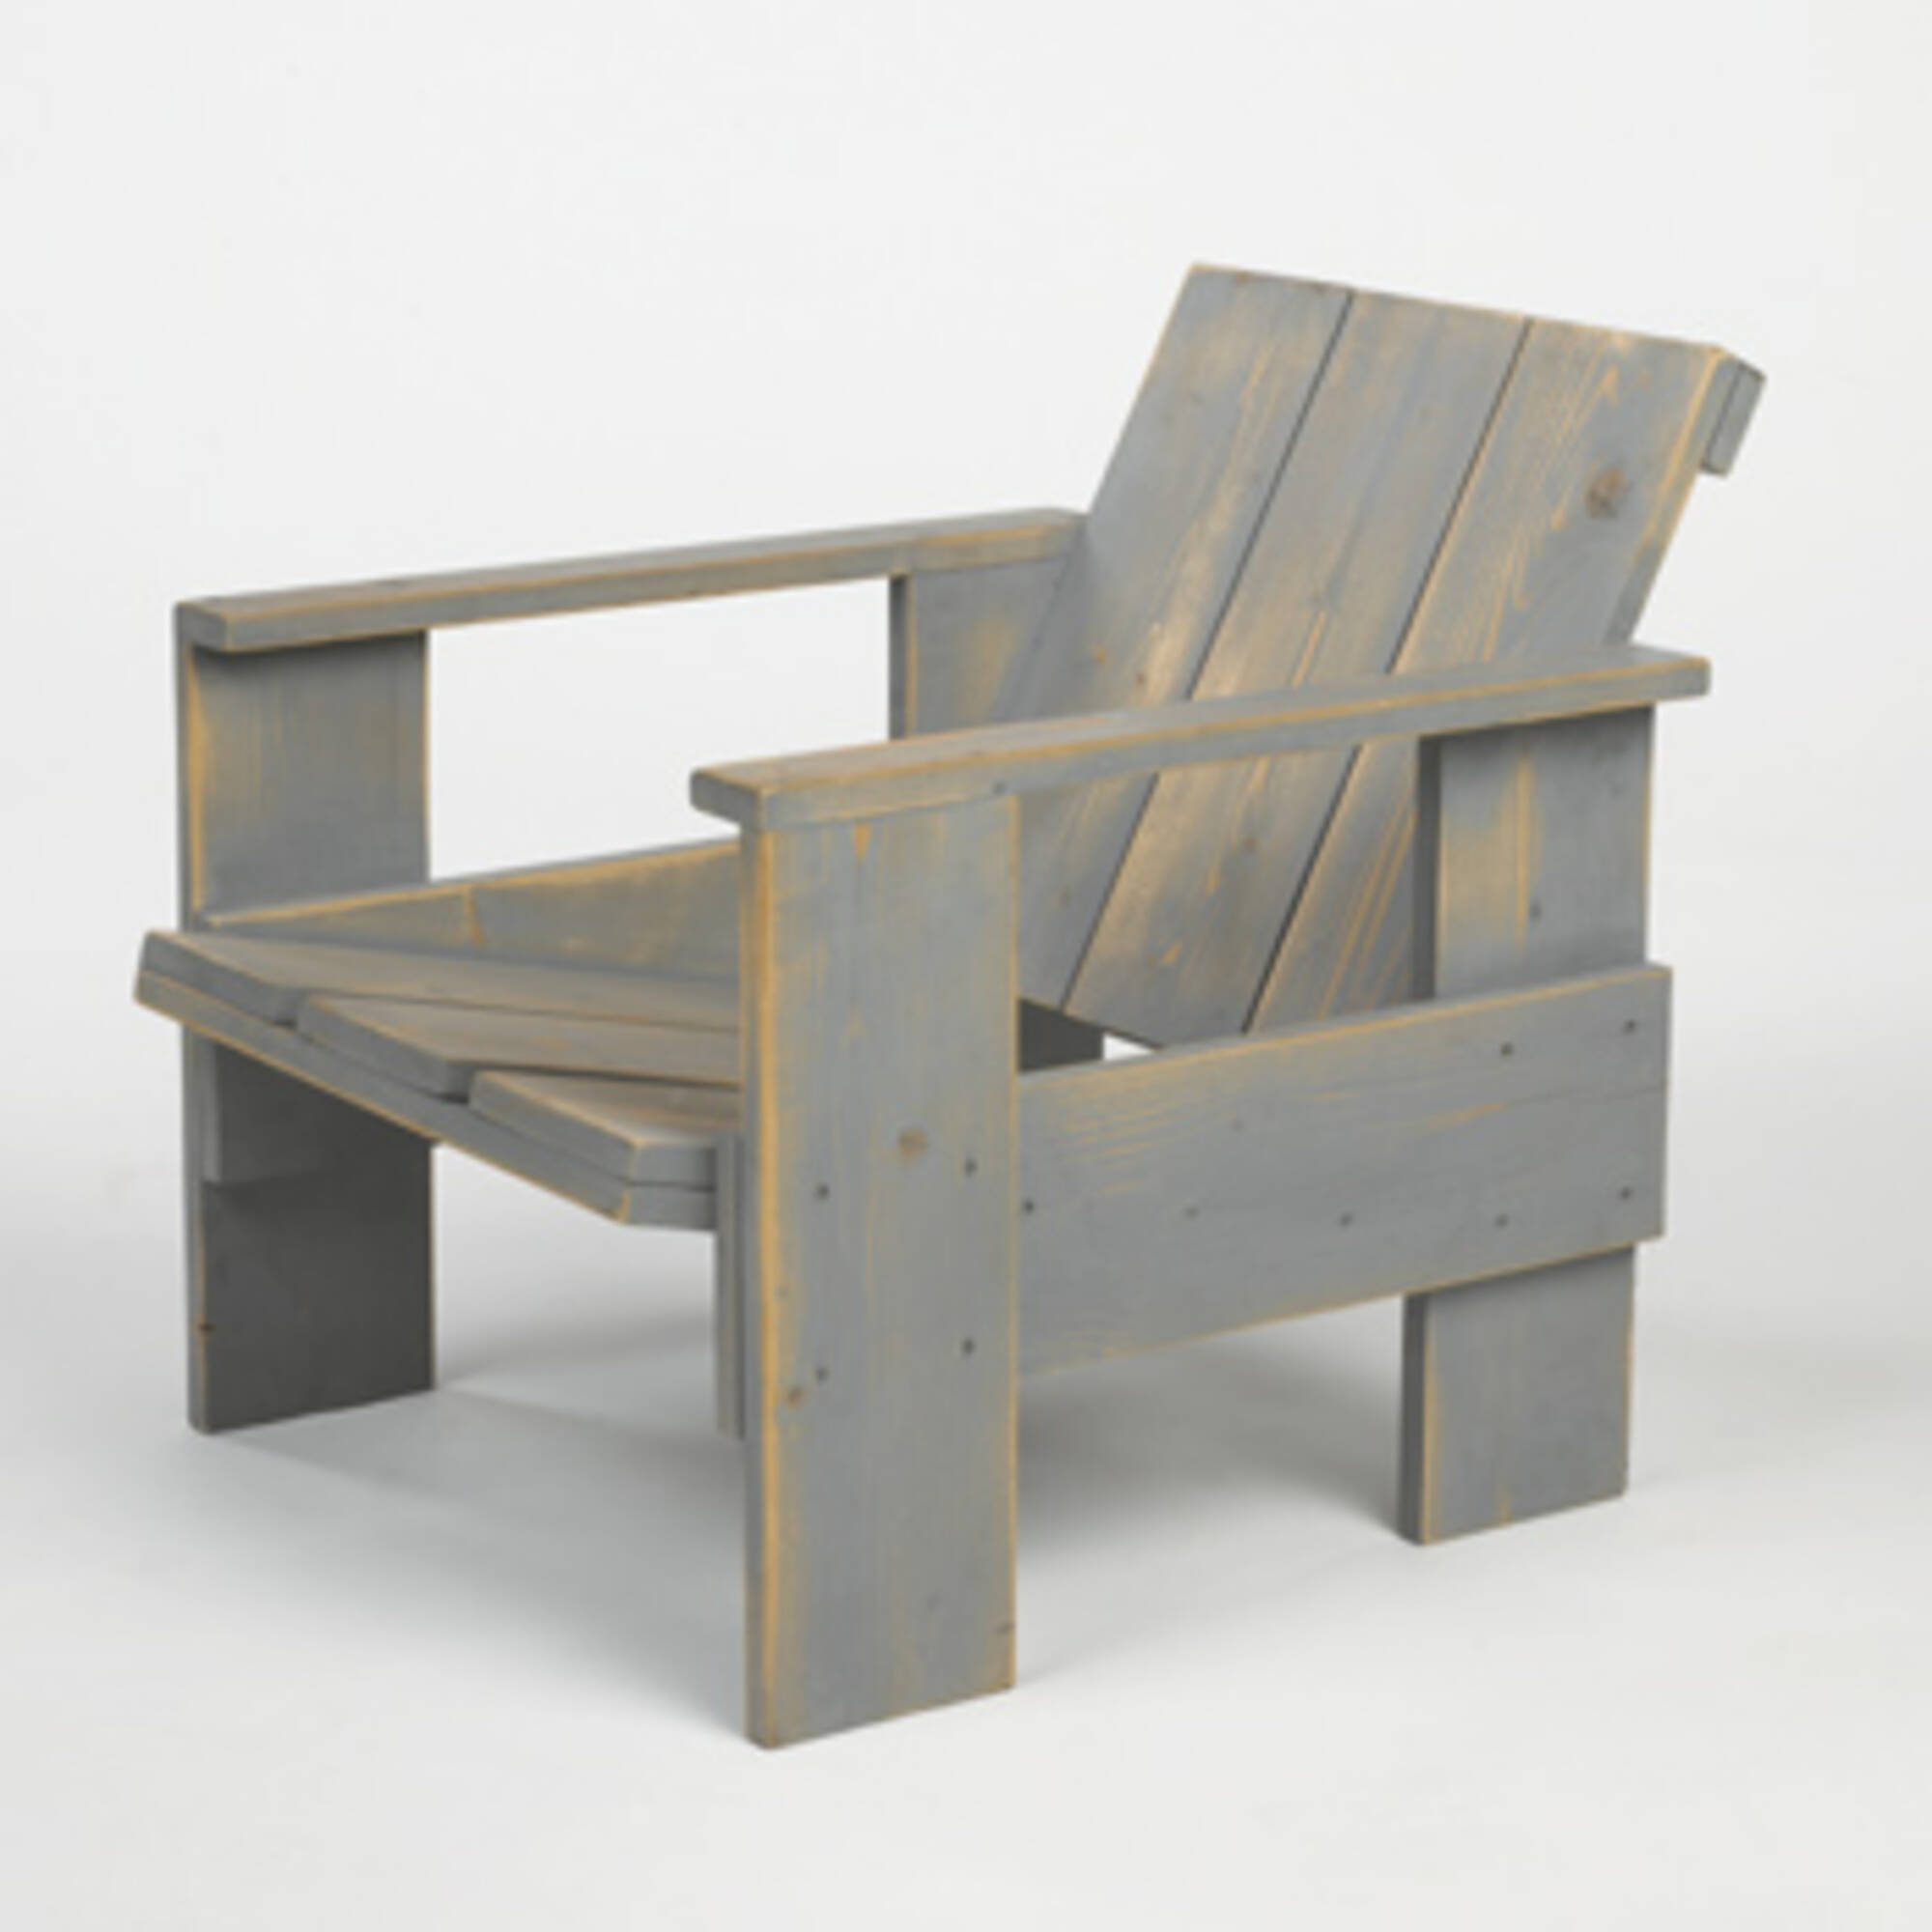 670 Gerrit Rietveld Crate Chair Modern Design 10 March 2002